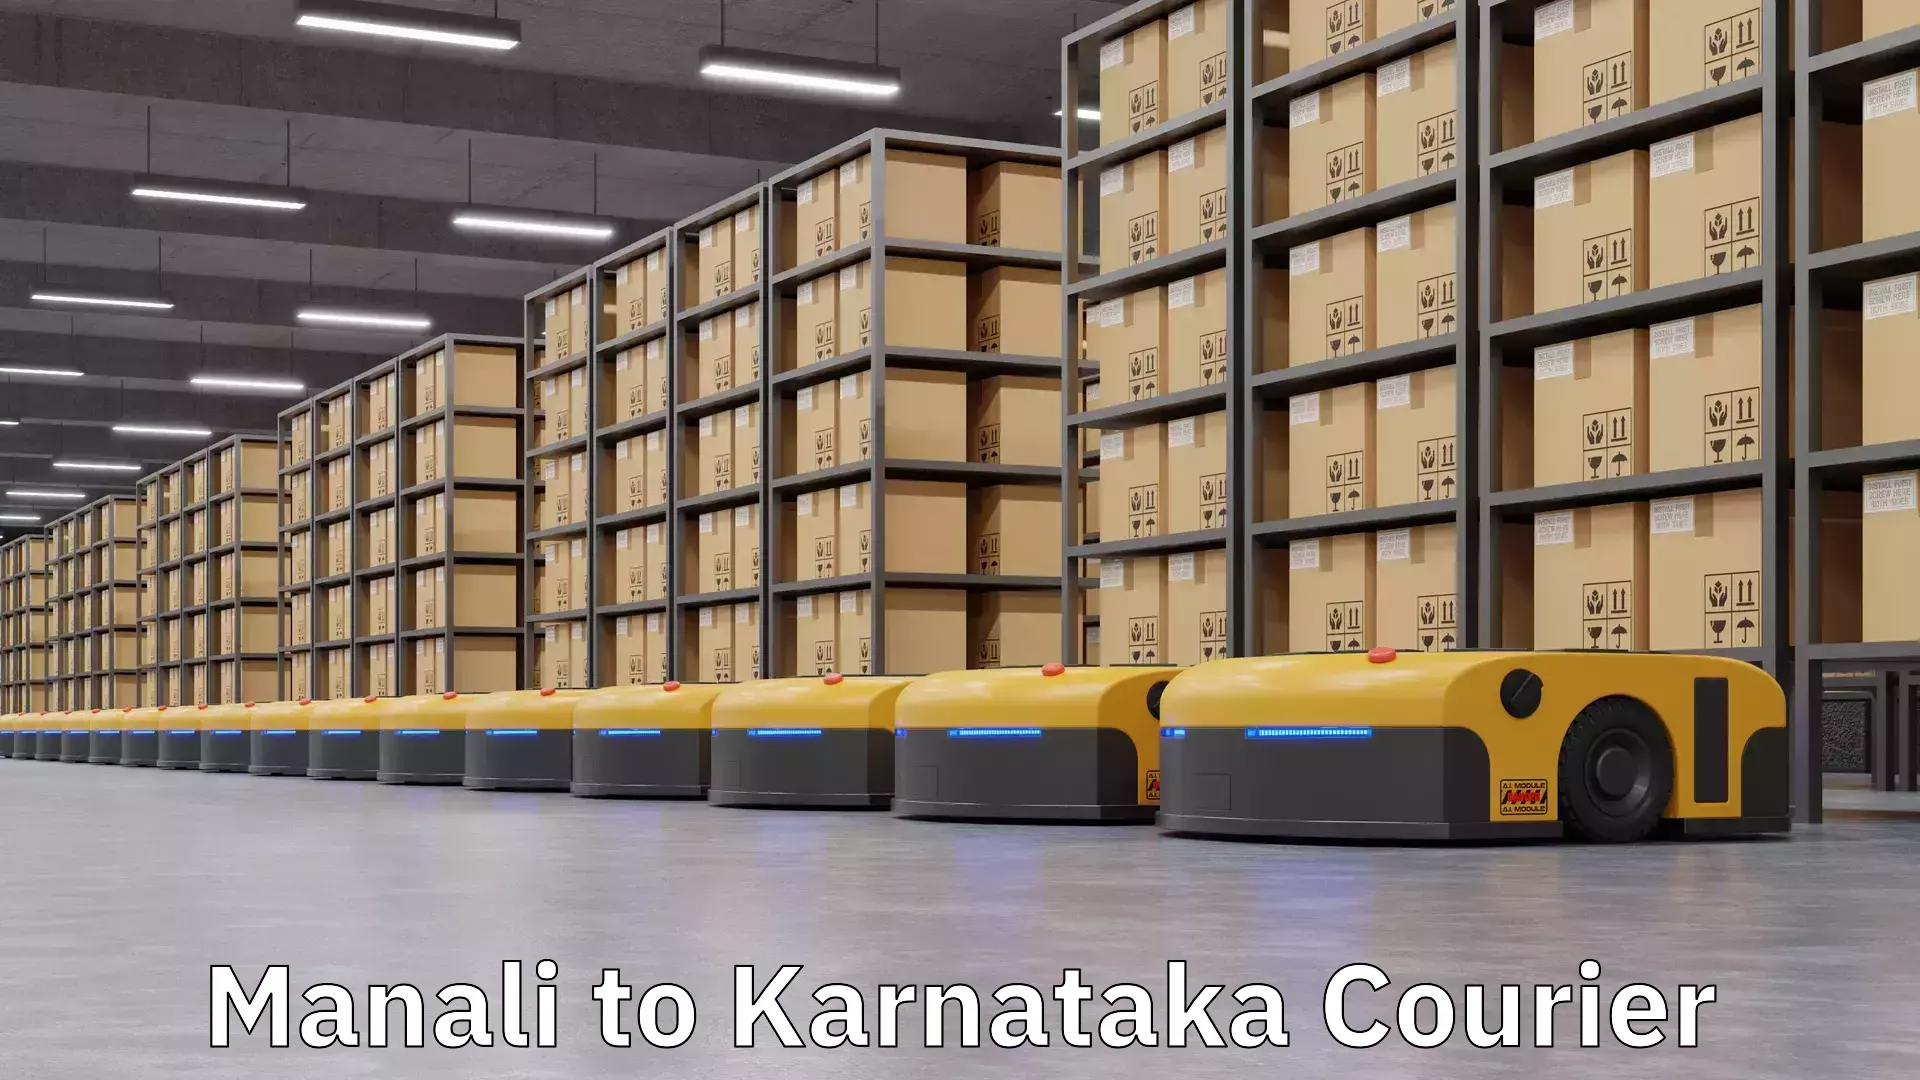 User-friendly delivery service Manali to Karnataka